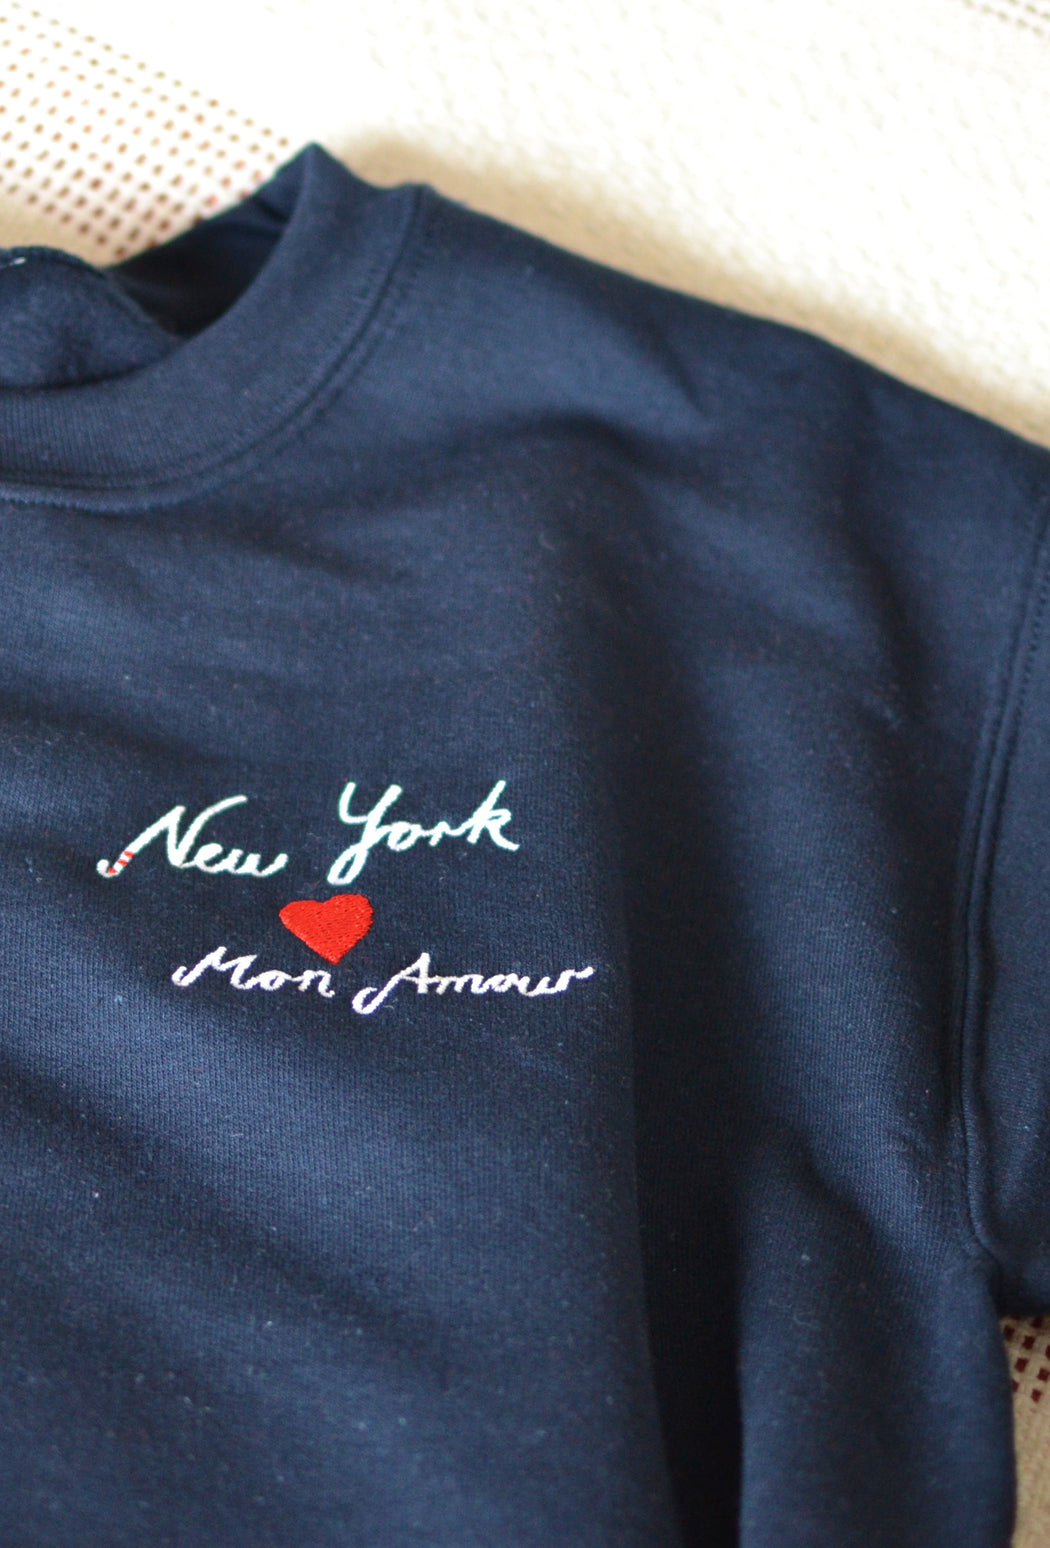 New York Mon Amour embroidered Sweatshirt ♥